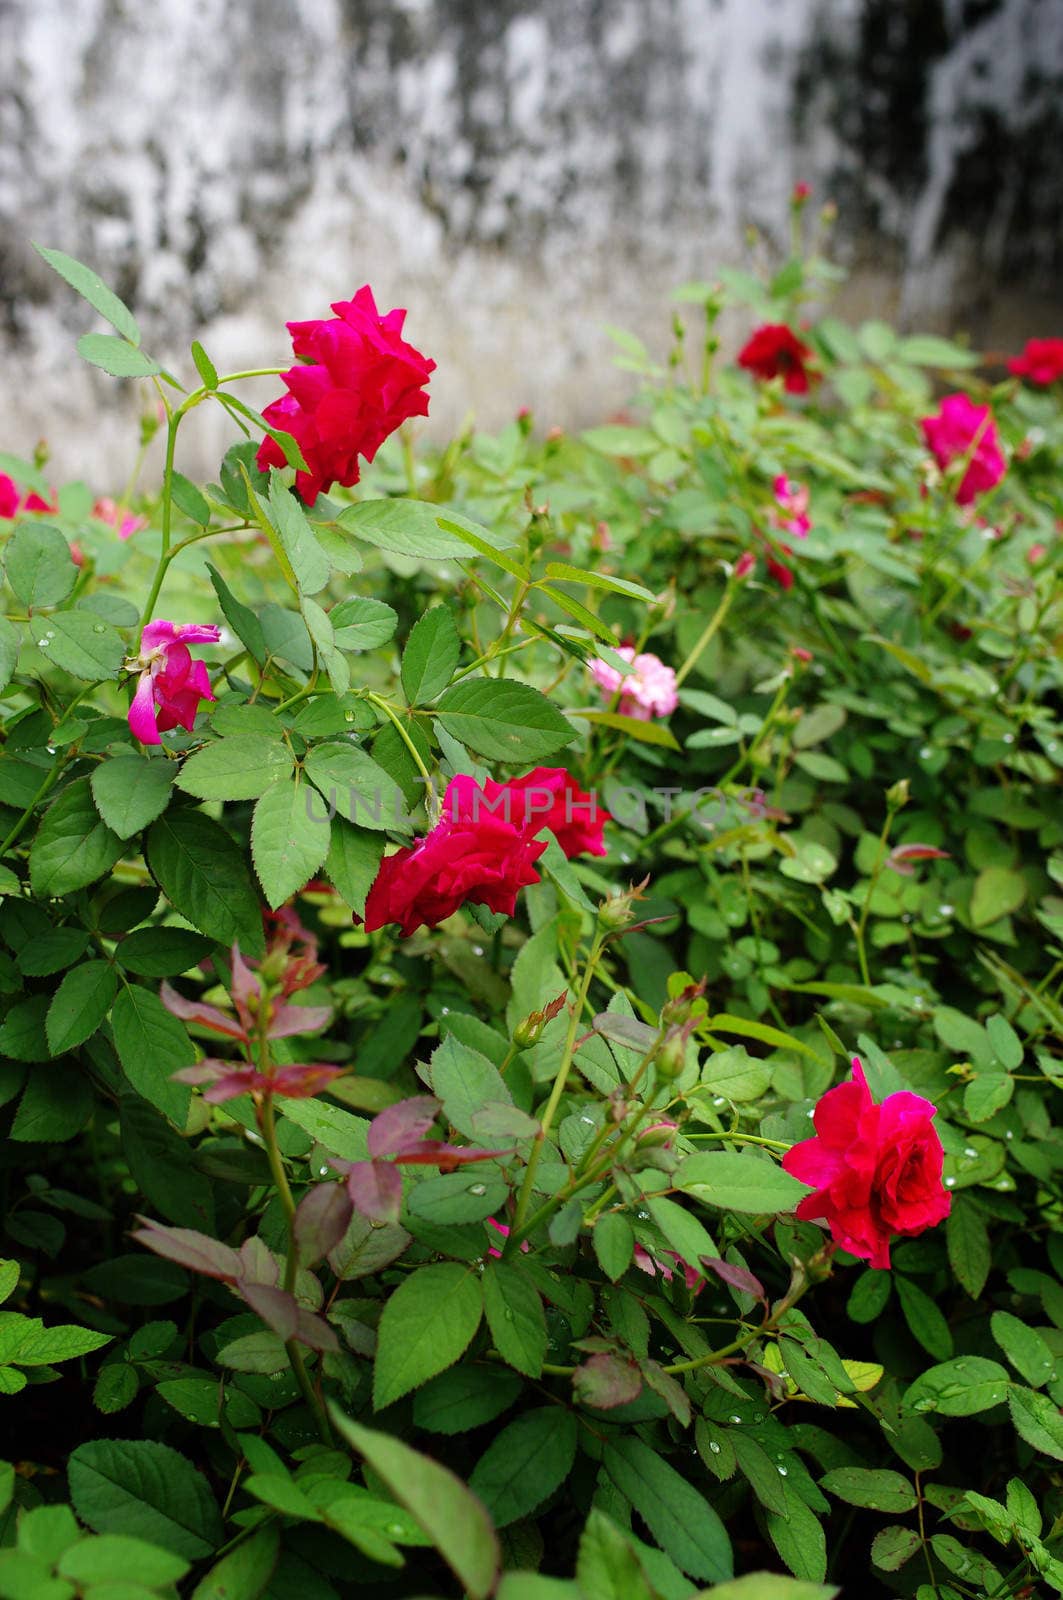 Red rose flower, Love concept